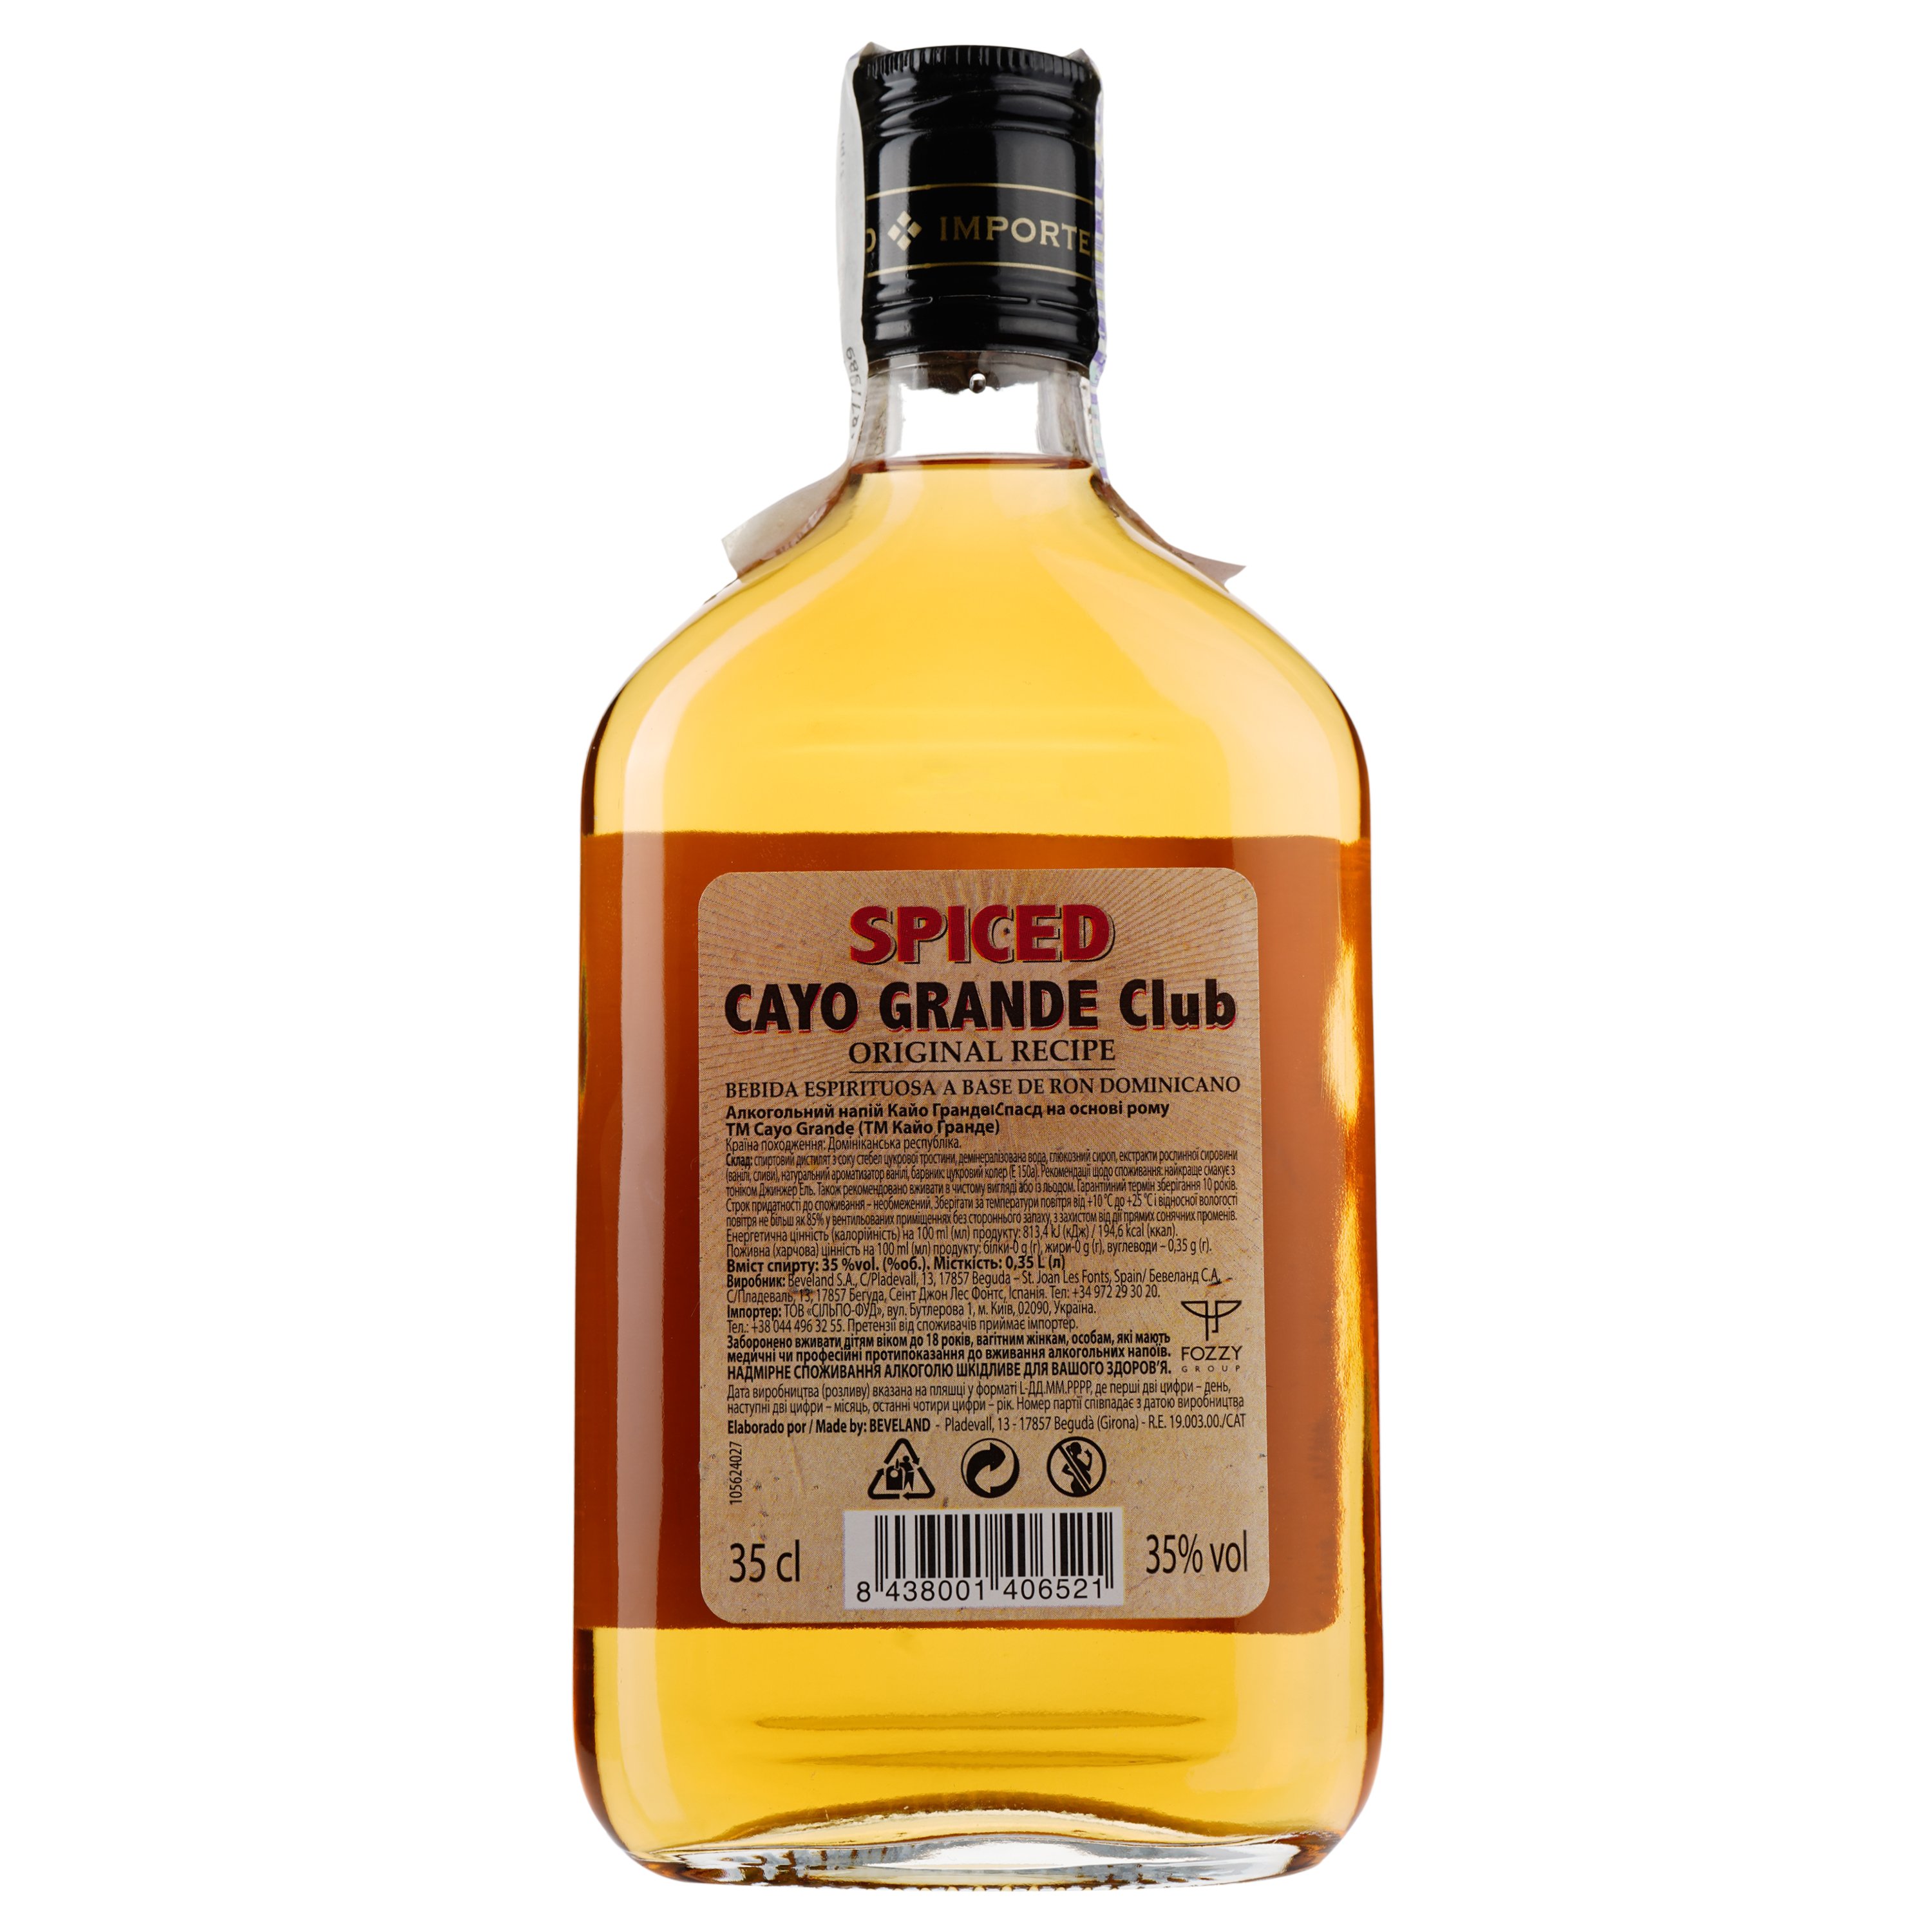 Ромовый напиток Cayo Grande Club Spiced, 35%, 0,35 л (630975) - фото 2